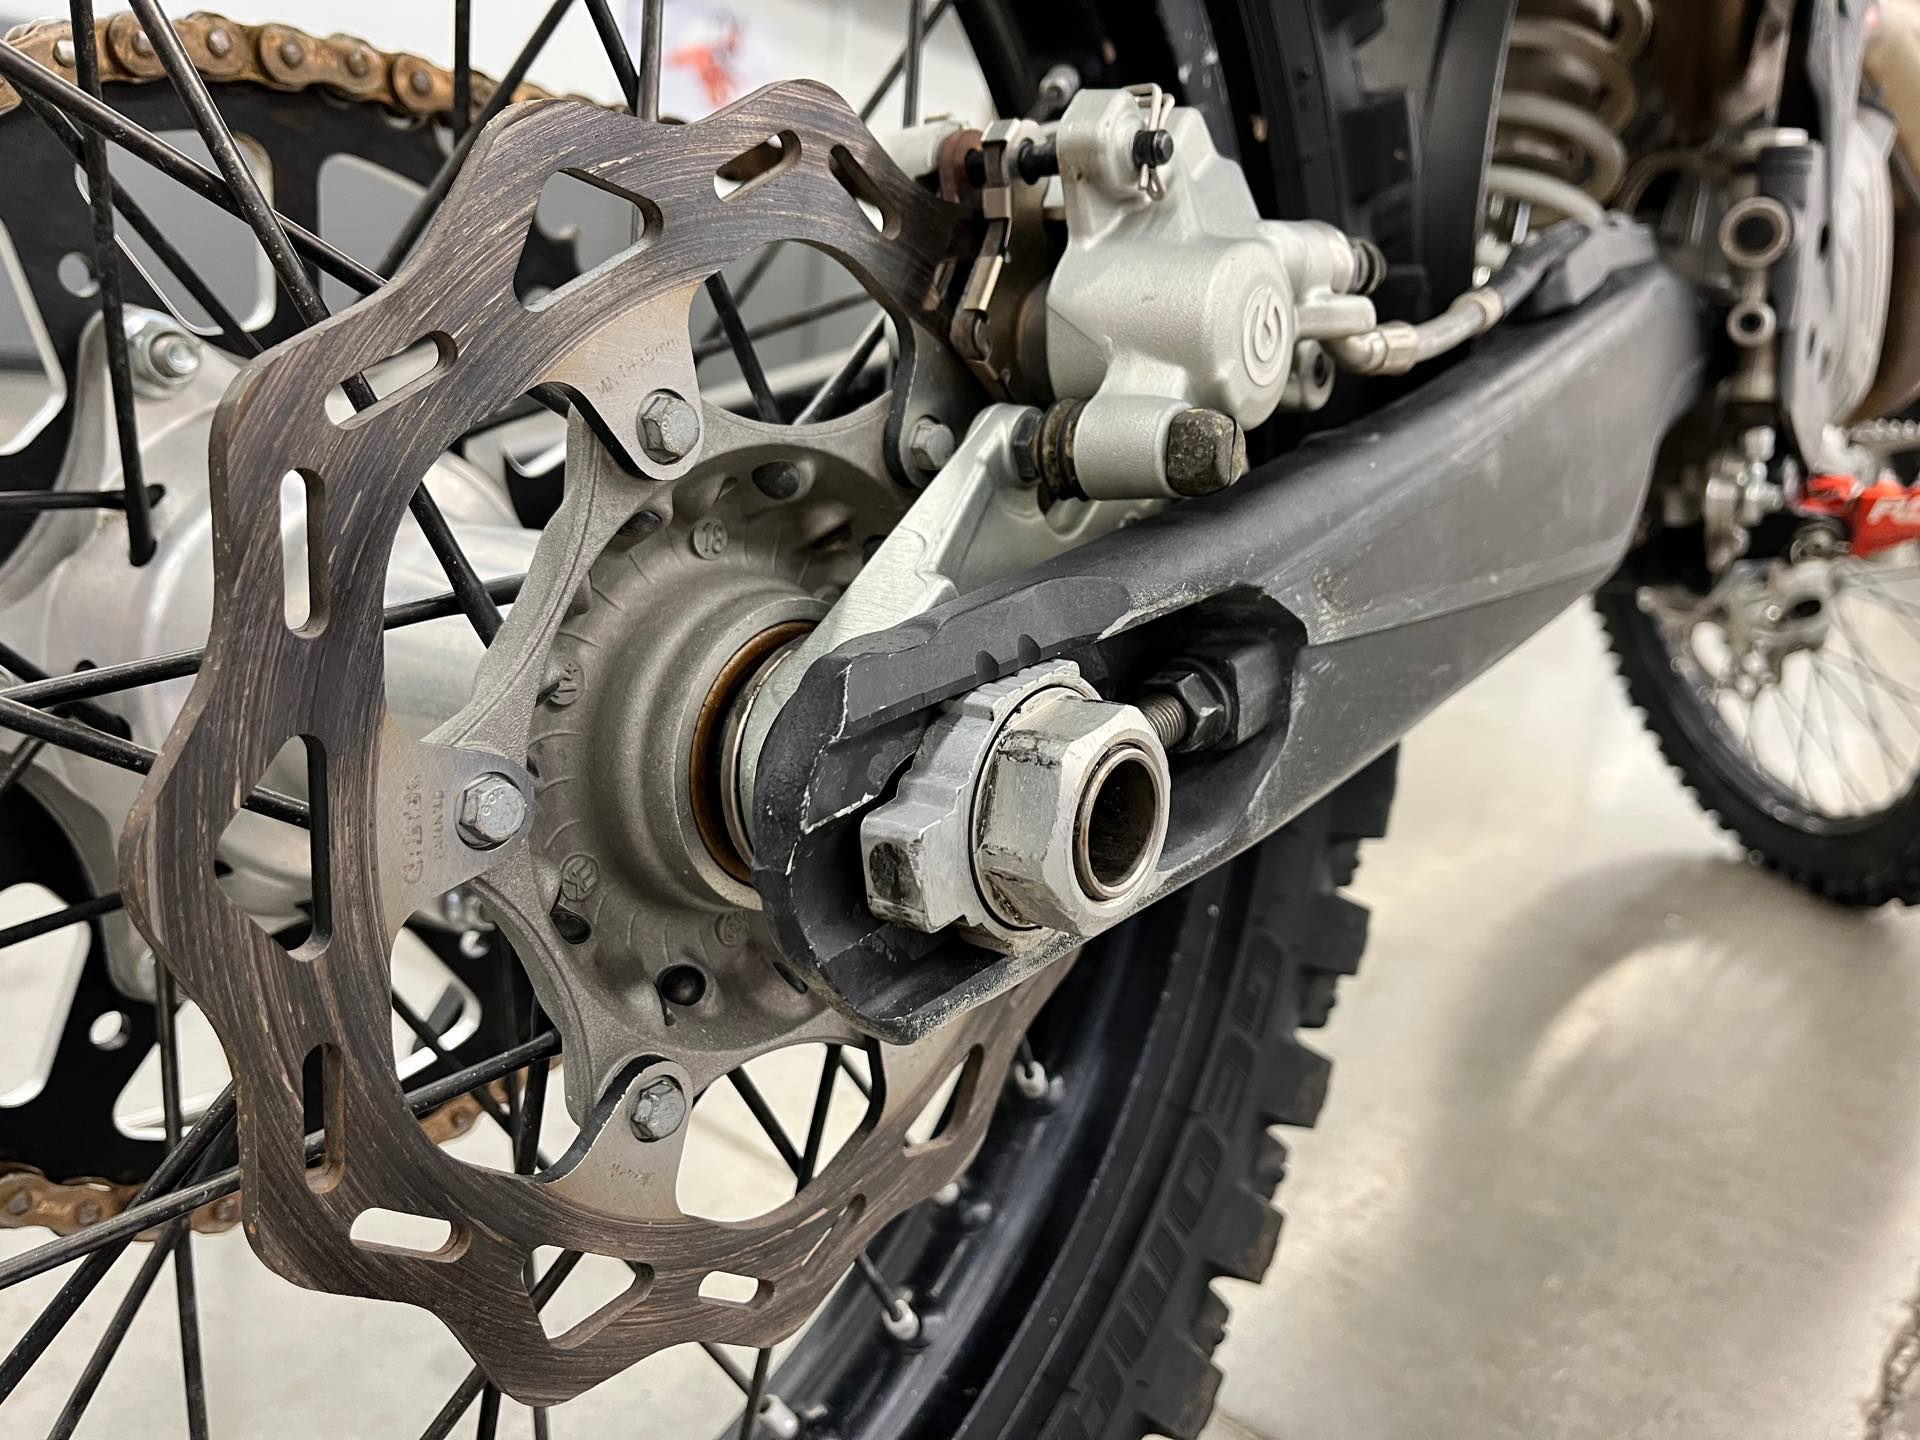 2019 KTM SX 450 F at Aces Motorcycles - Denver